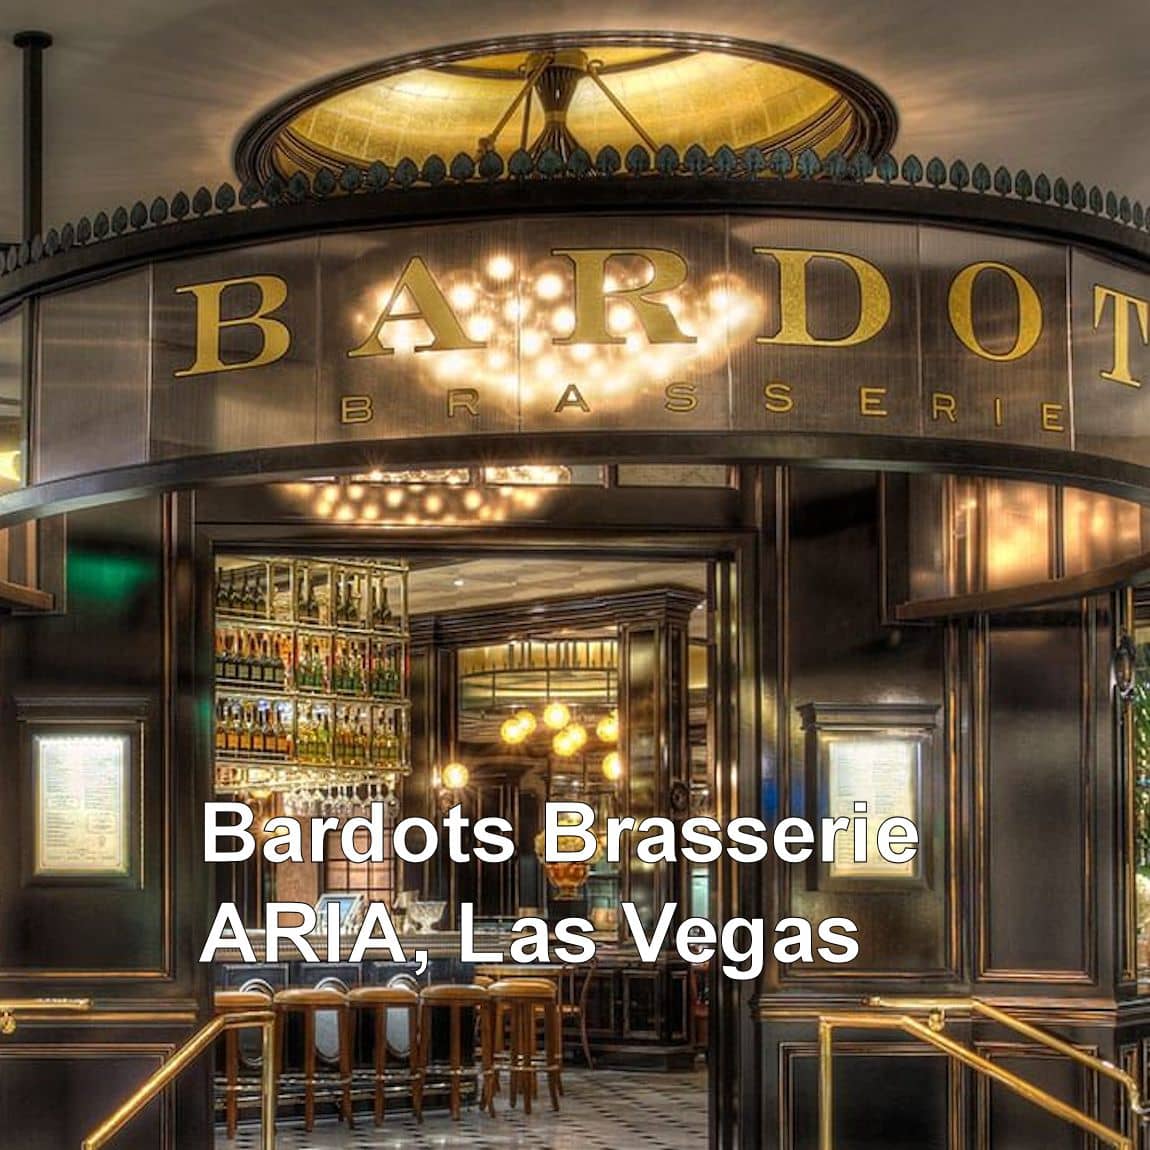 Bardot brasserie website